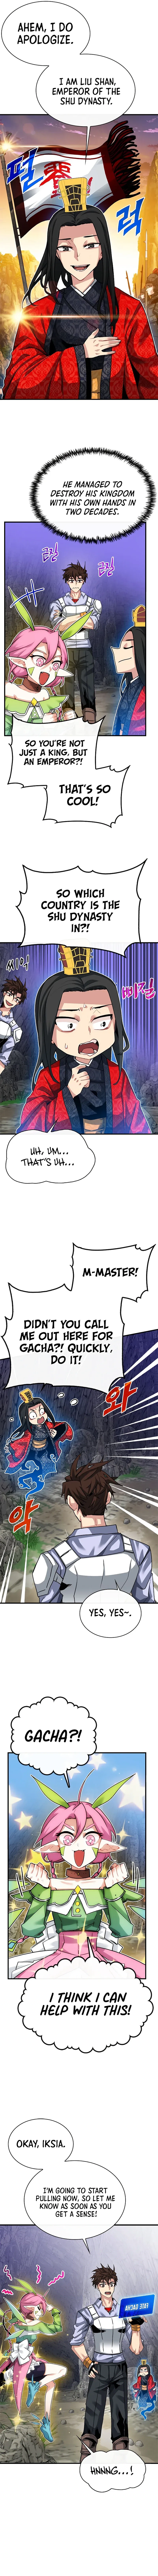 SSS-Class Gacha Hunter Chapter 44 page 9 - MangaWeebs.in